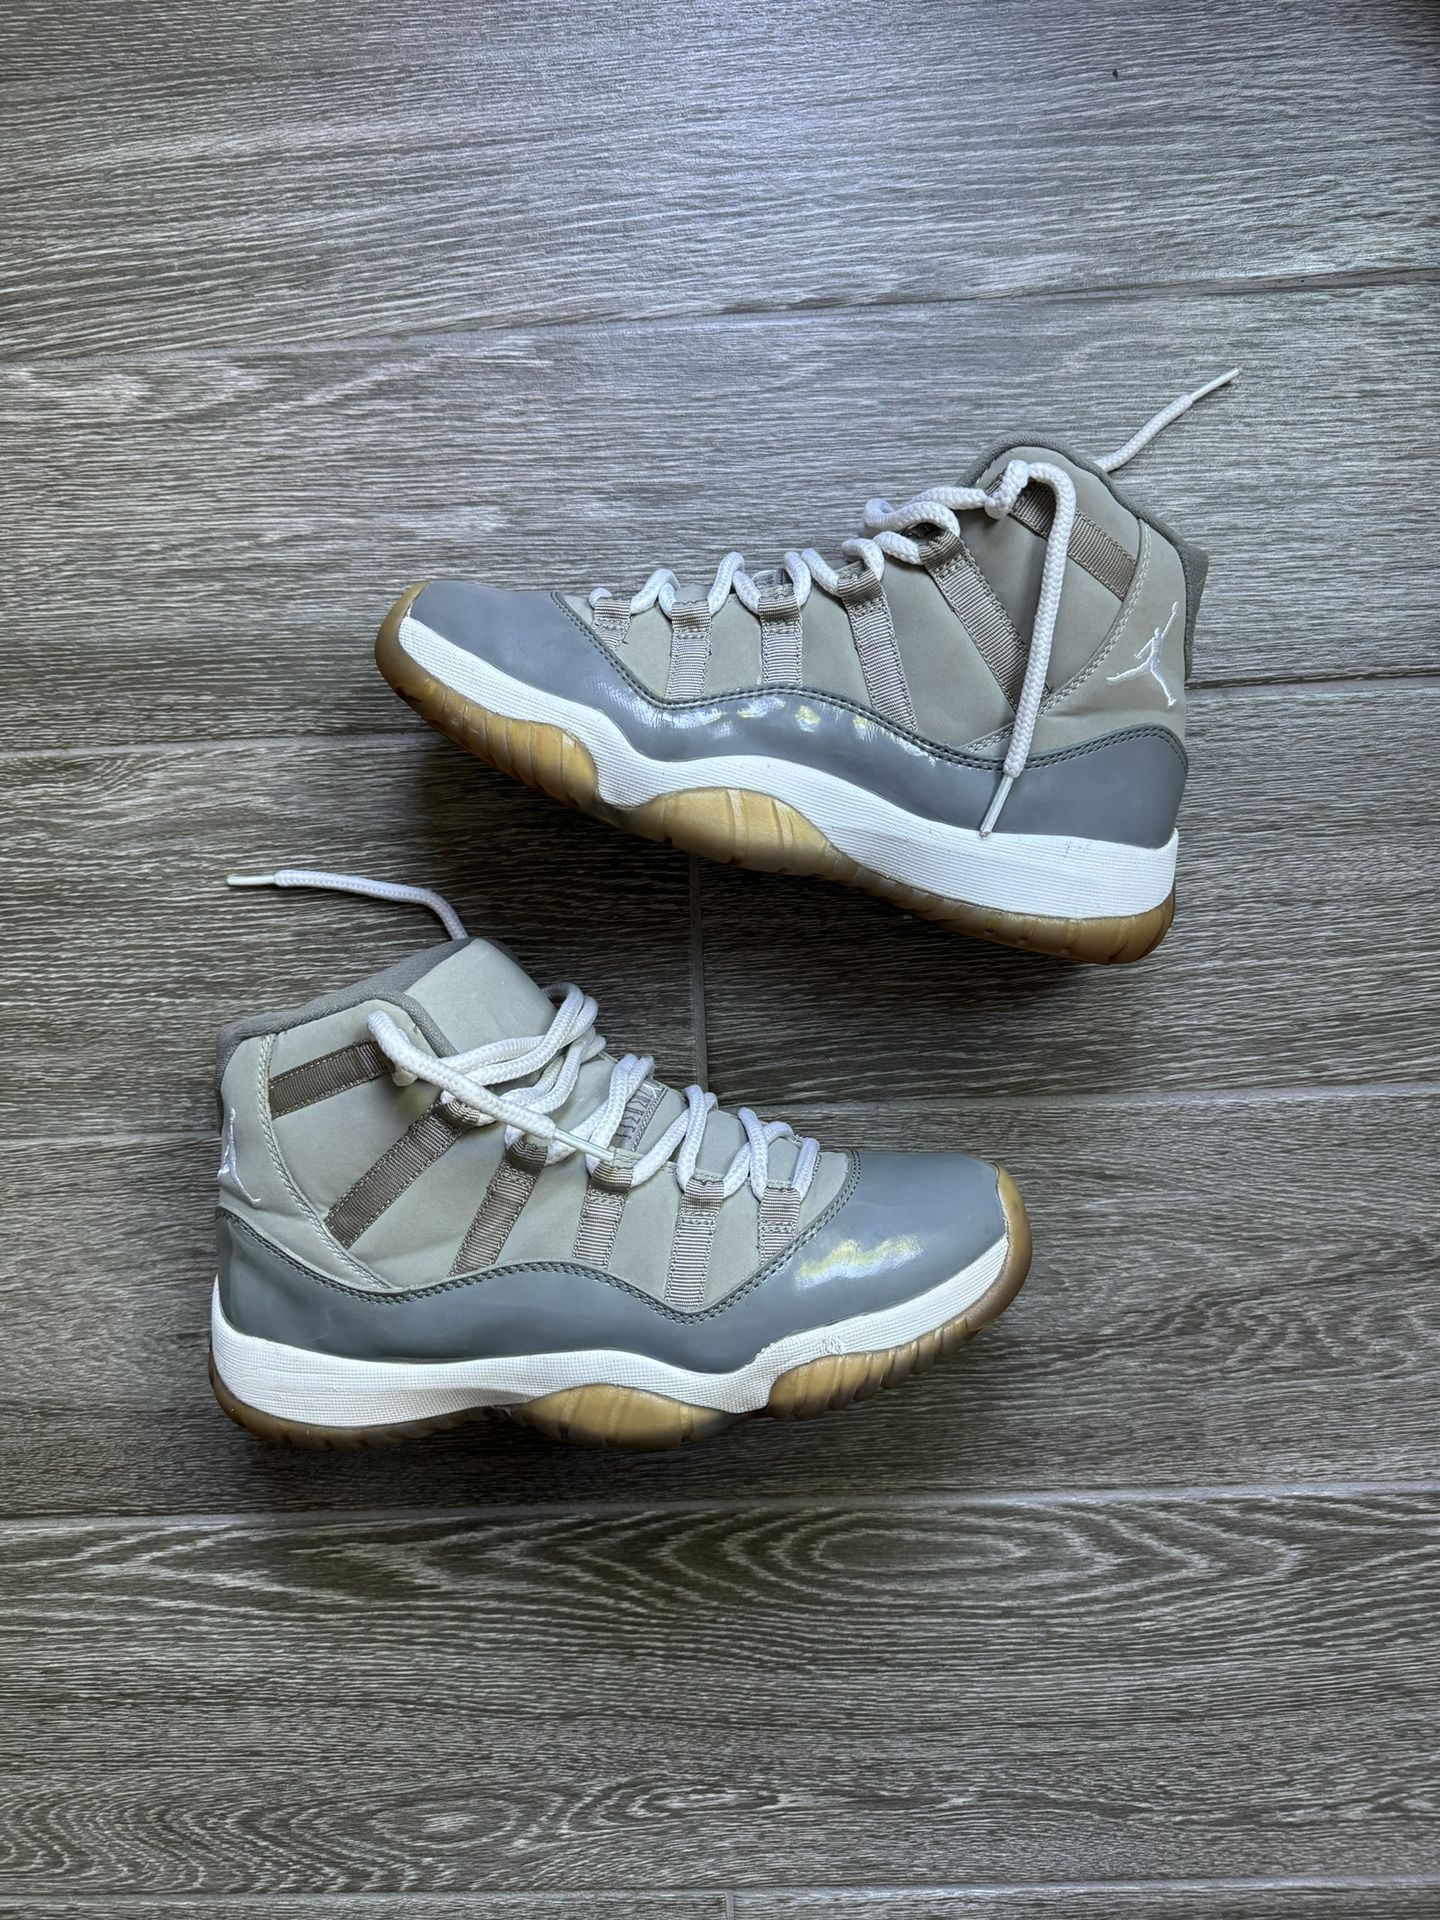 Jordan 11 cool gray 2010 pair